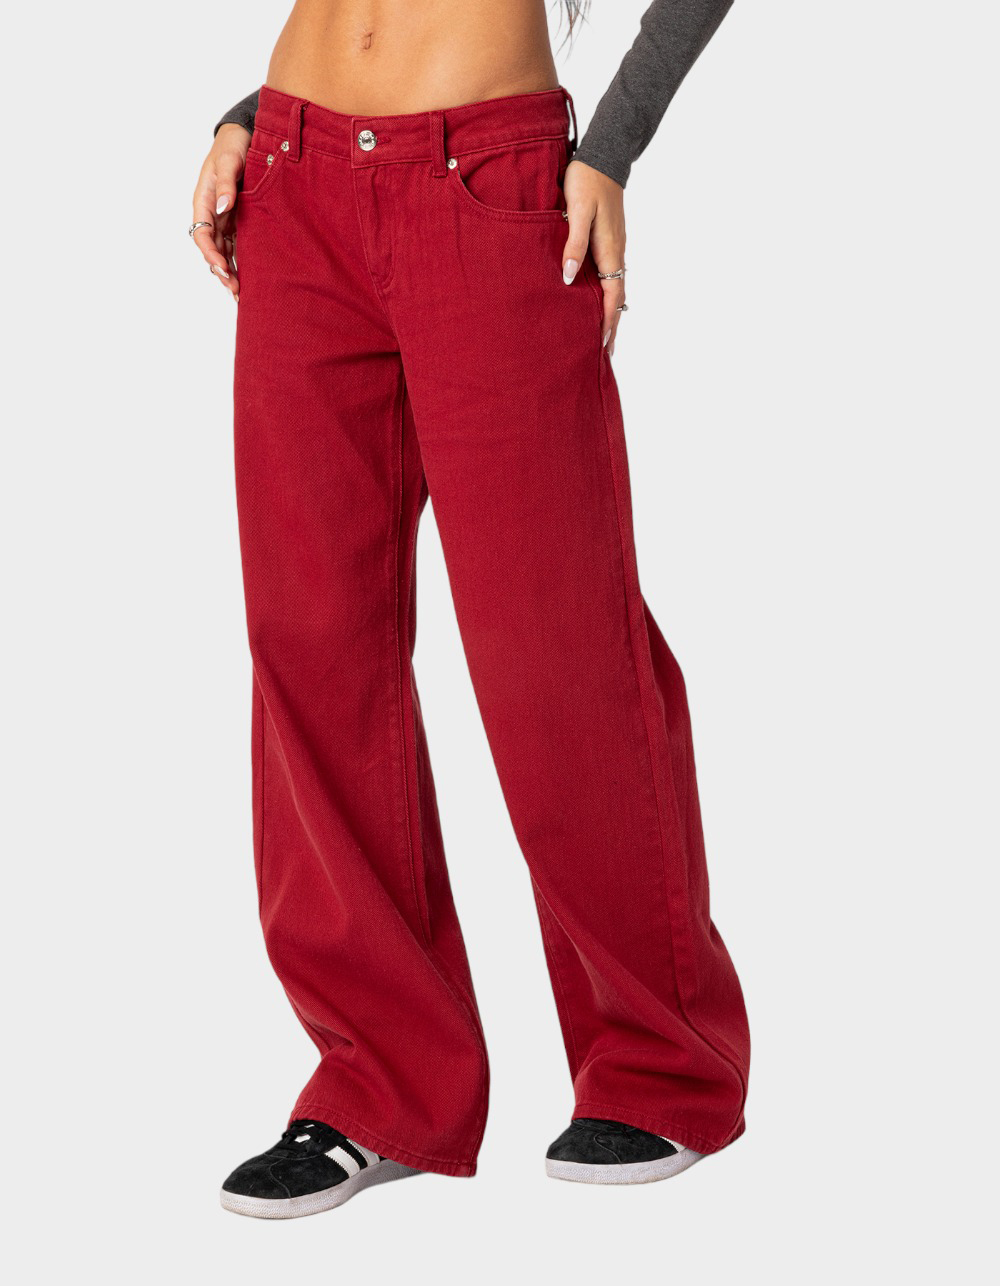 EDIKTED Roman Low Rise Slouchy Jeans Womens Jeans - DK RED | Tillys